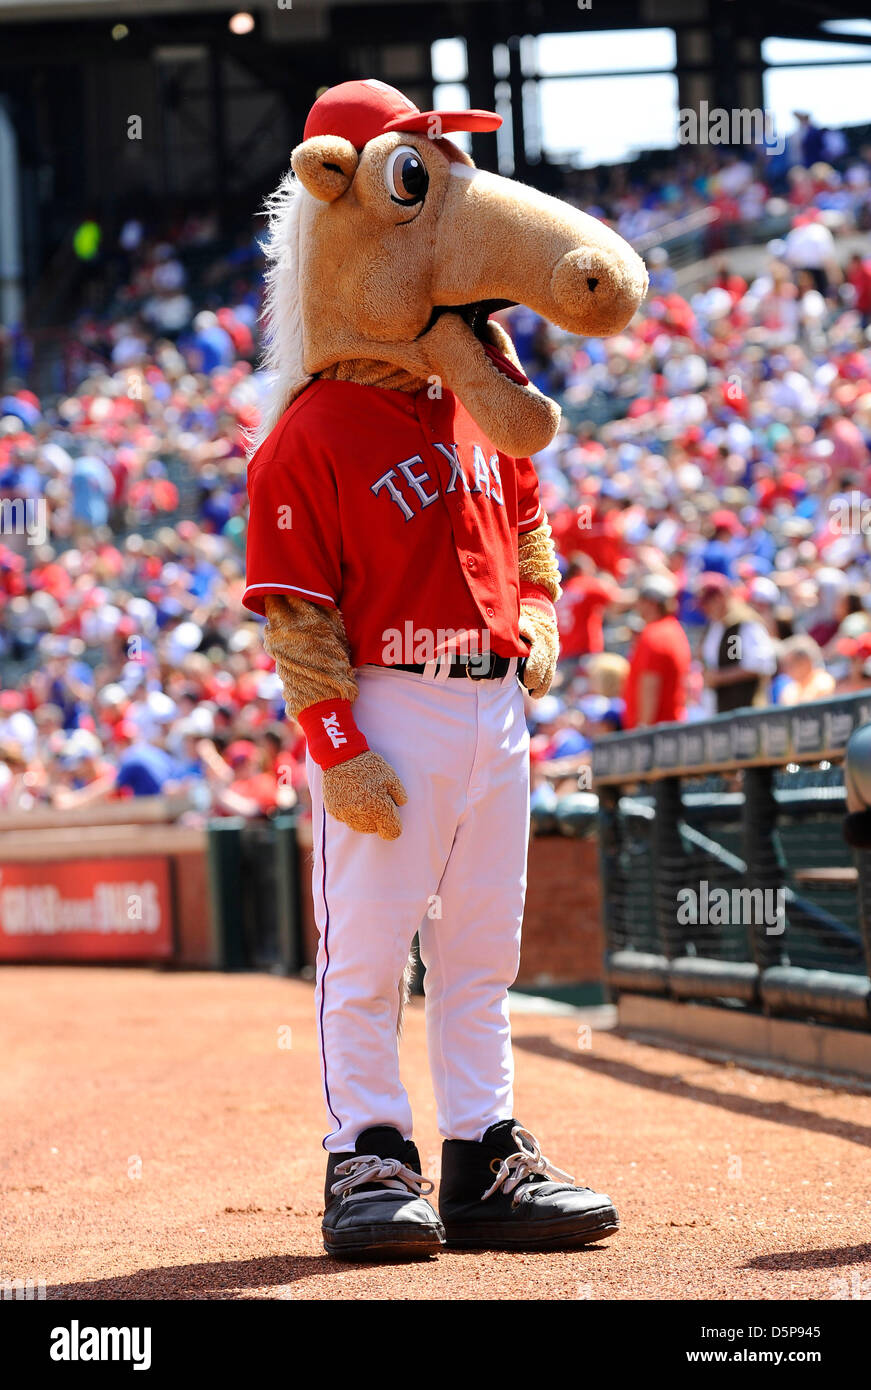 April 6, 2013 - Arlington, Texas, USA - April 6, 2013. Arlington, Texas,  USA. Texas Rangers mascot ''Ranger'' entertains fans as The Anaheim Angels  played the Texas Rangers at the Ballpark in